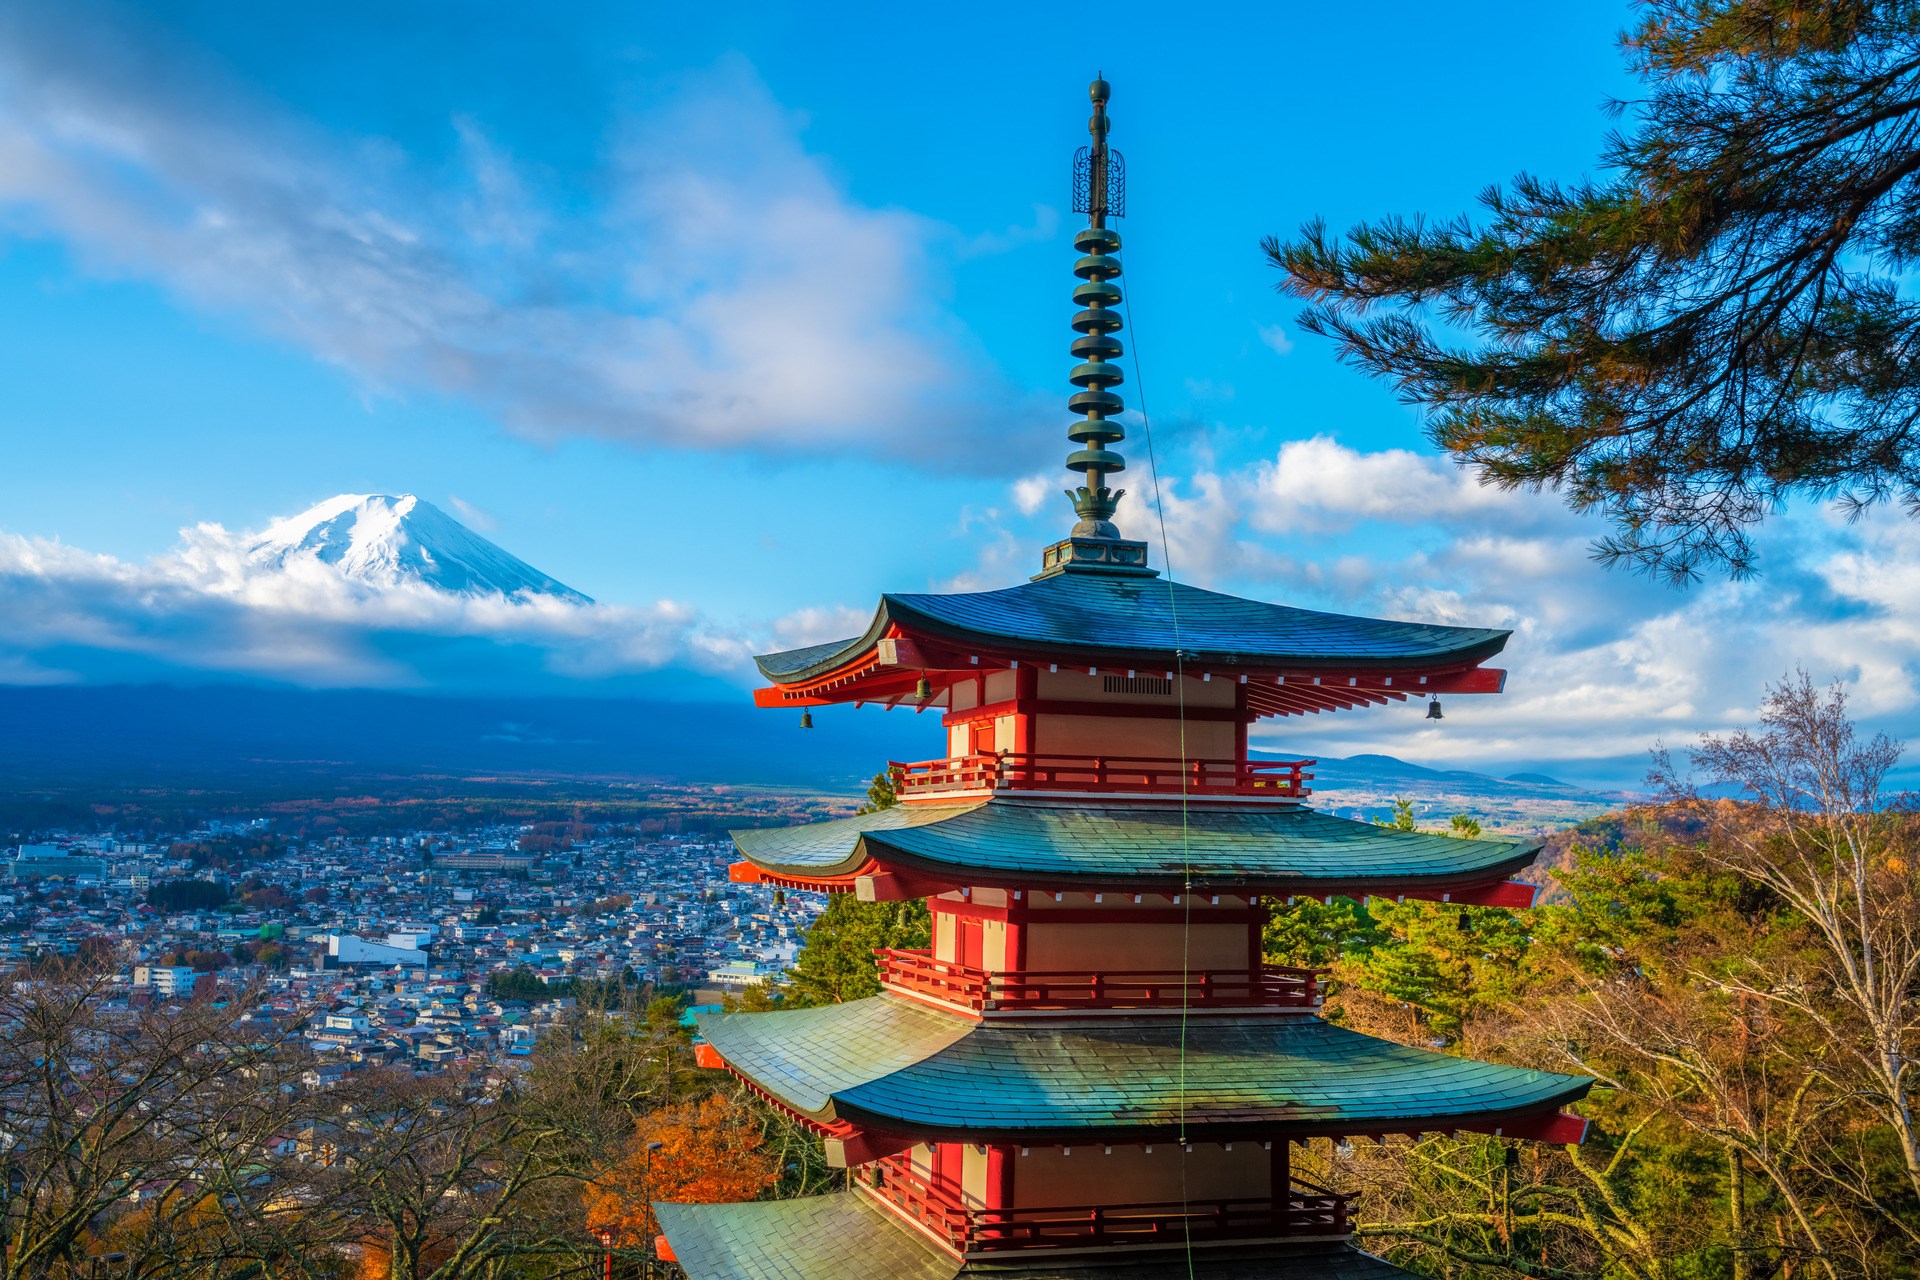 Landmarks of japan including Chureito red Pagoda andFuji mountain in autumn season